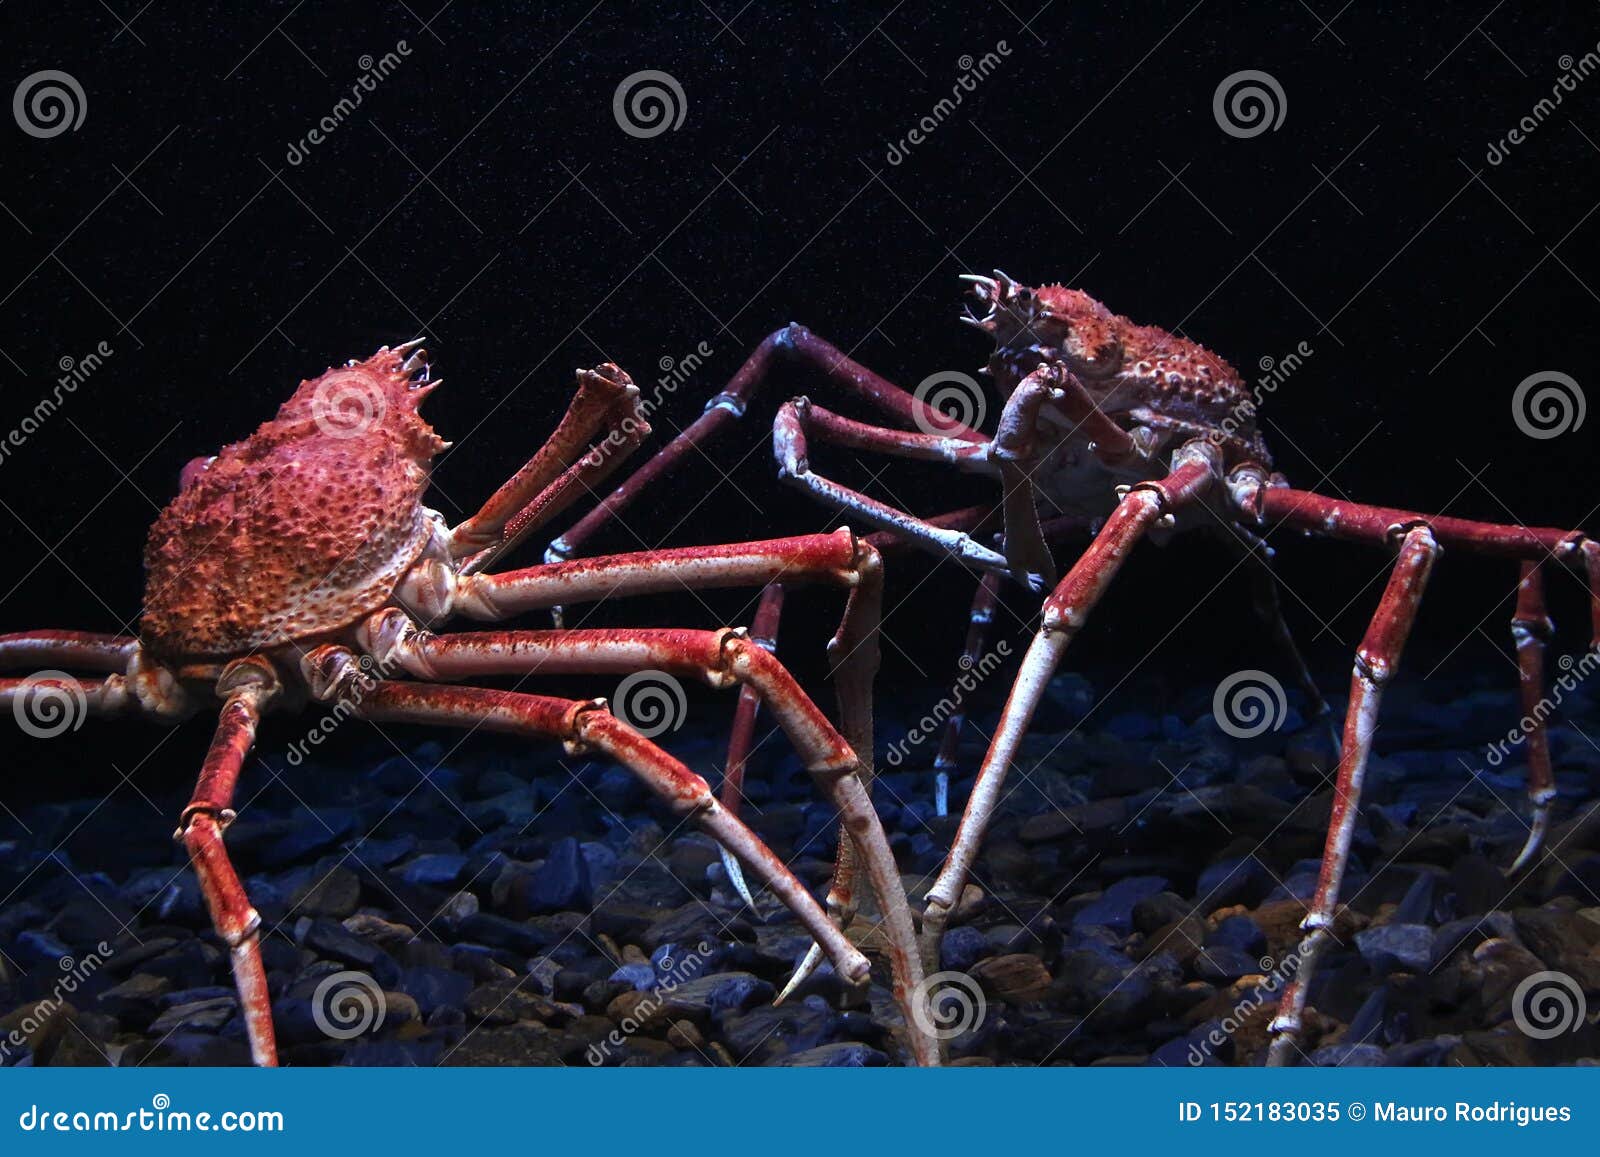 Japanese Spider Crab Stock Image Image Of Fish Large